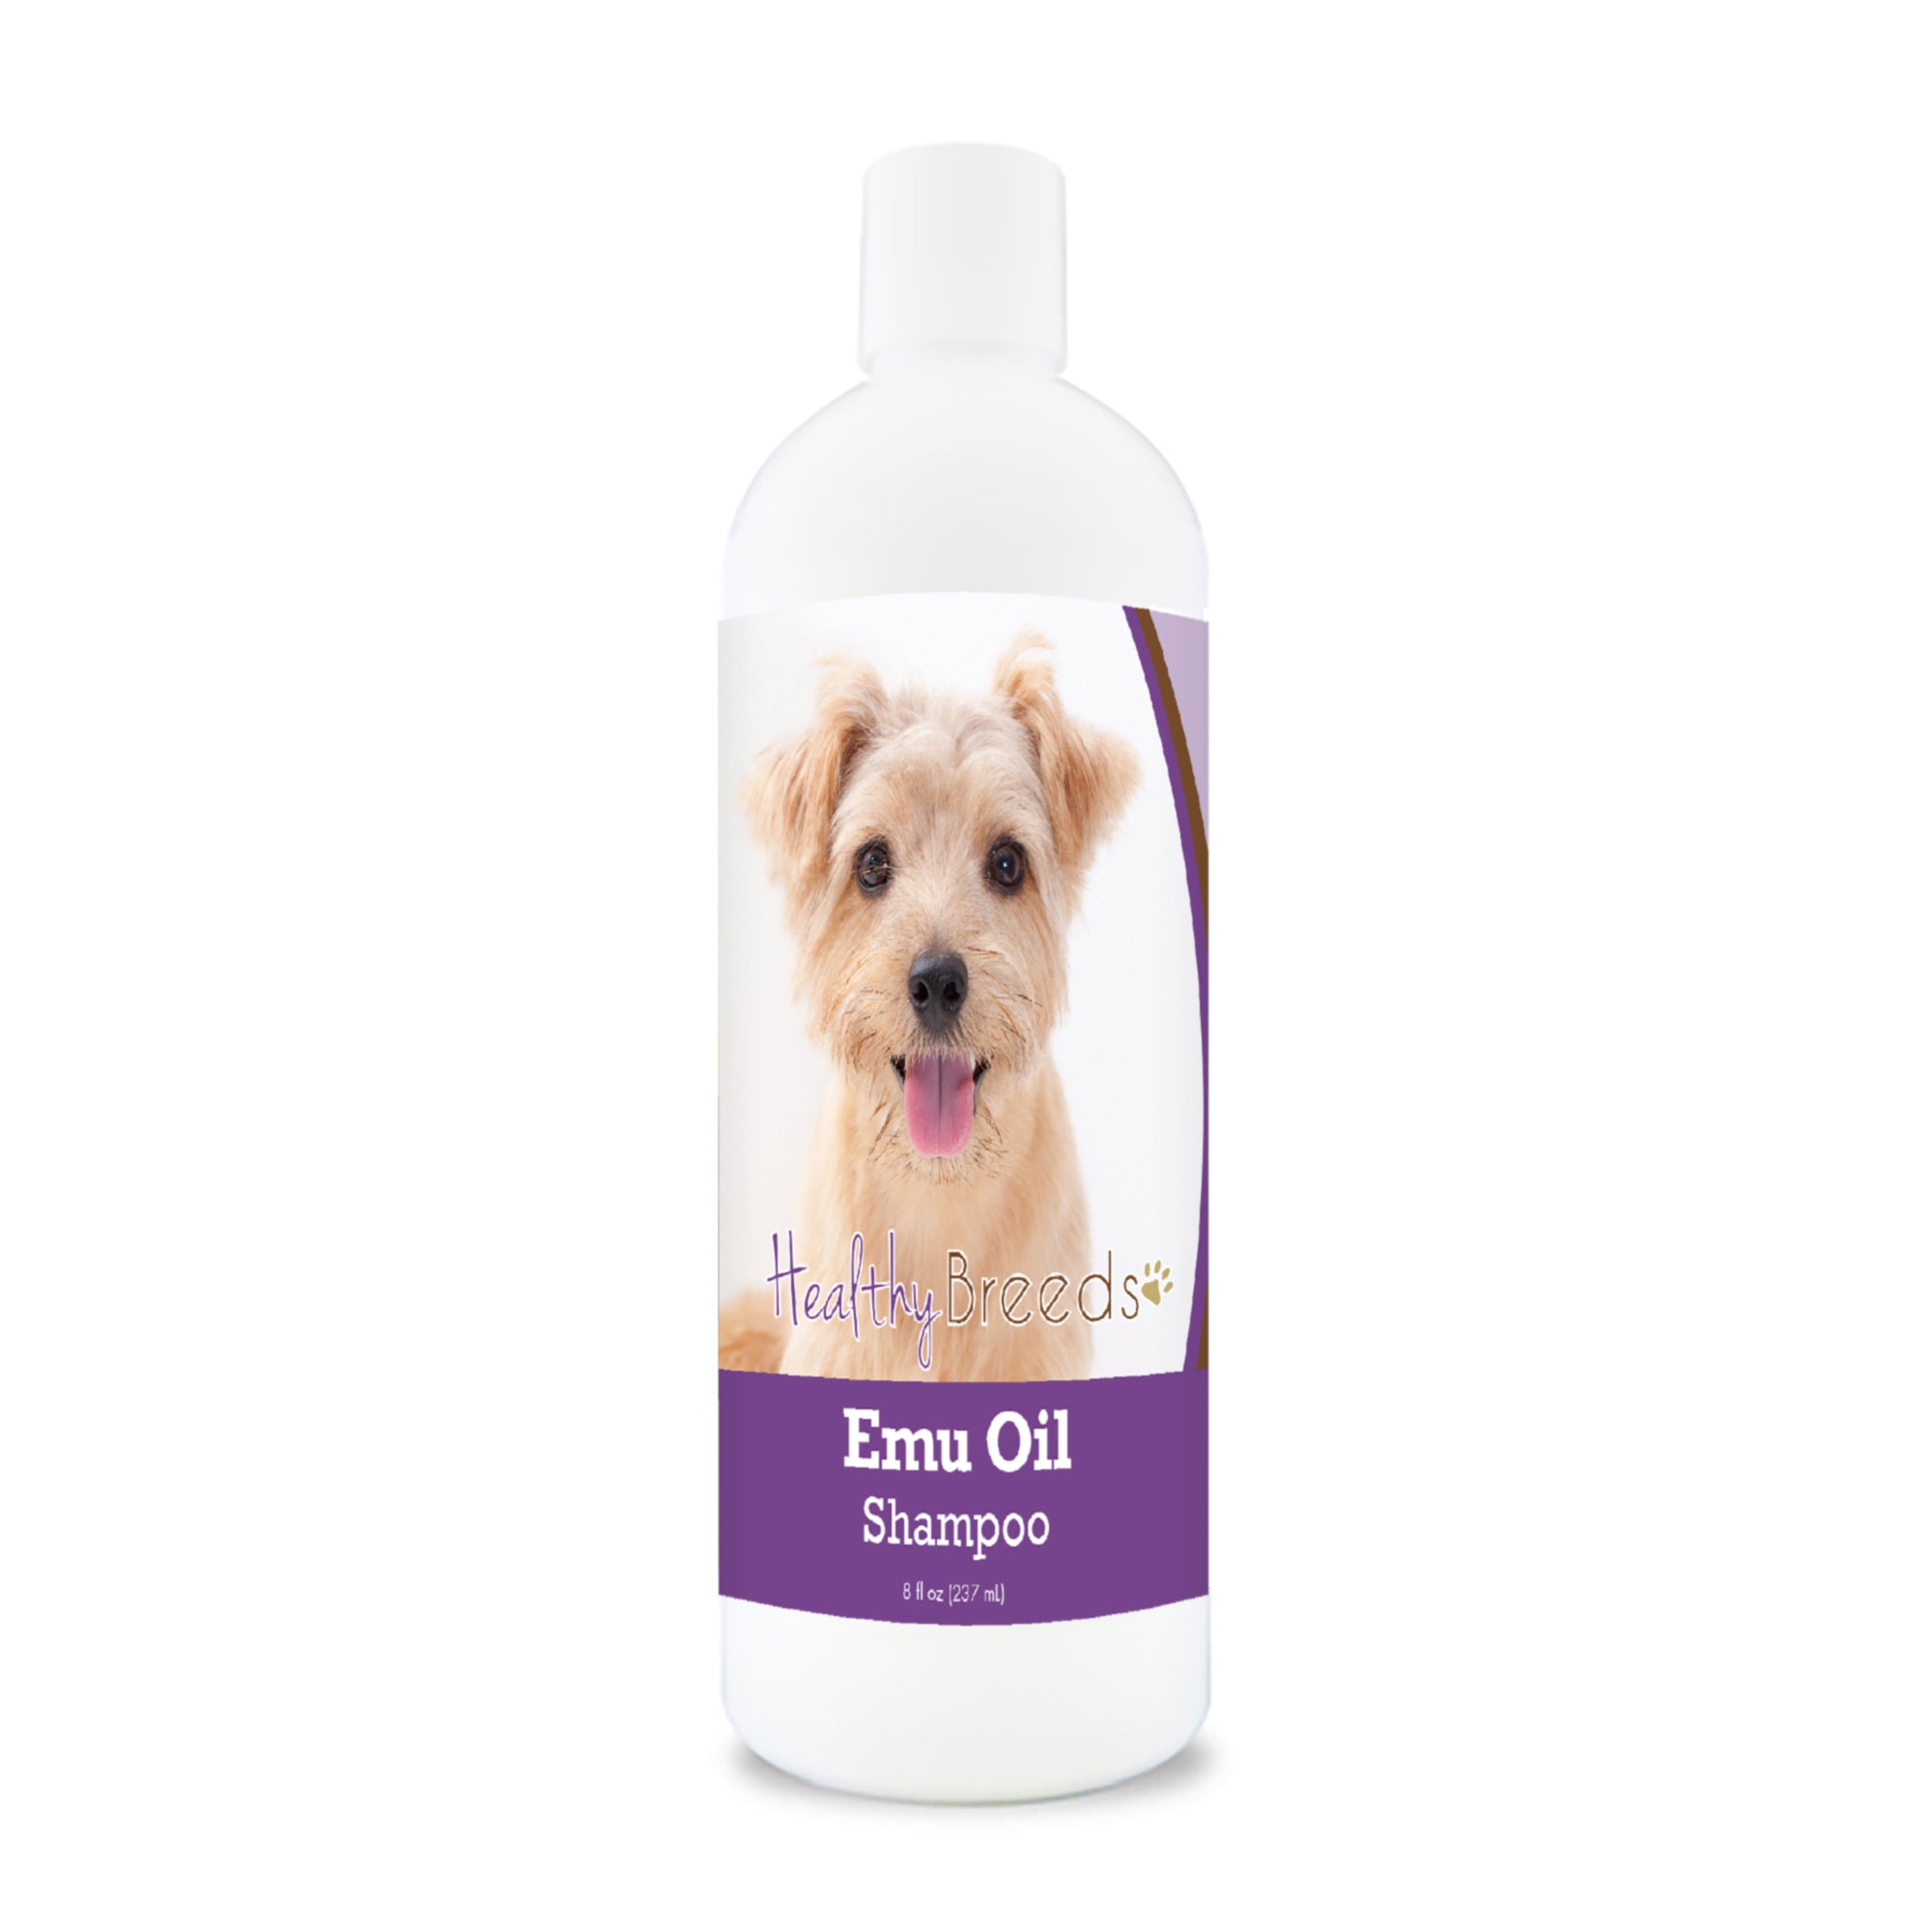 Norfolk Terrier Emu Oil Shampoo 8 oz